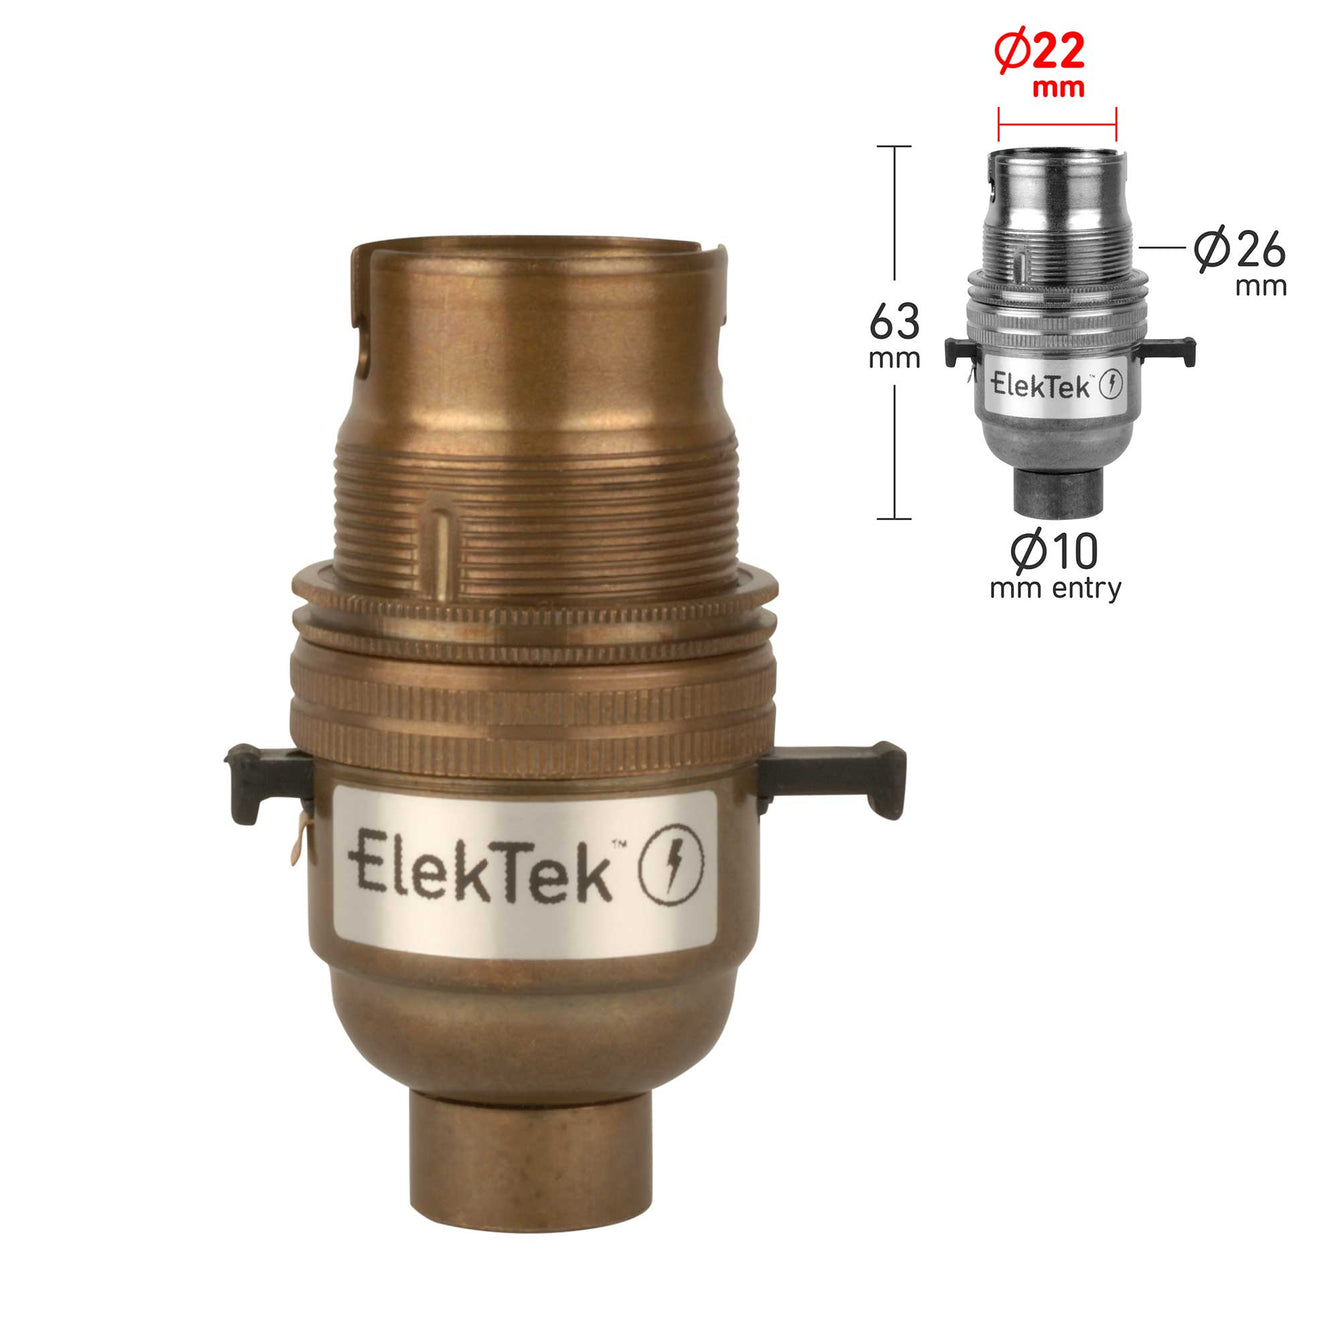 ElekTek Safety Switch Lamp Holder Bayonet Cap B22 10mm or Half Inch Entry With Shade Ring Solid Brass Nickel / 10mm